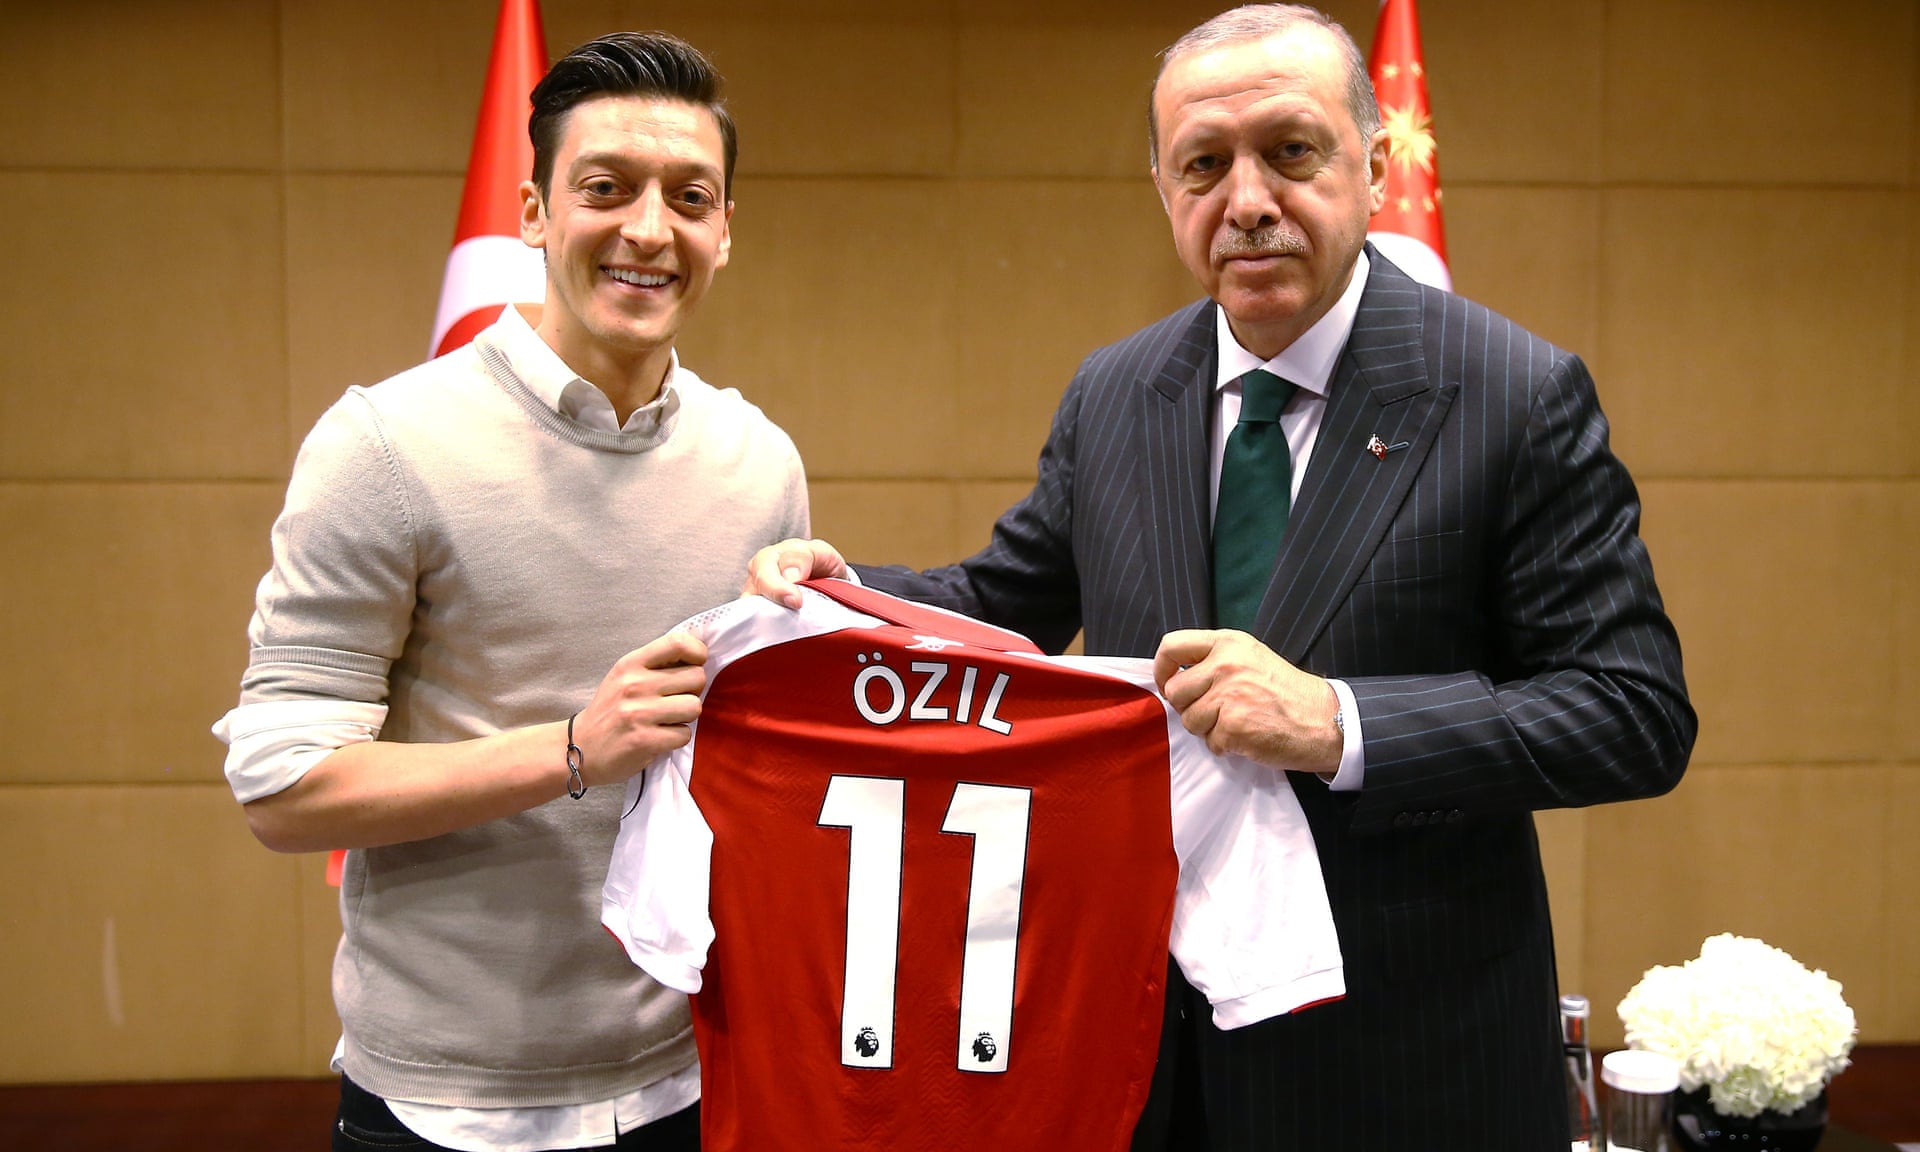 Ozil and Erdogan